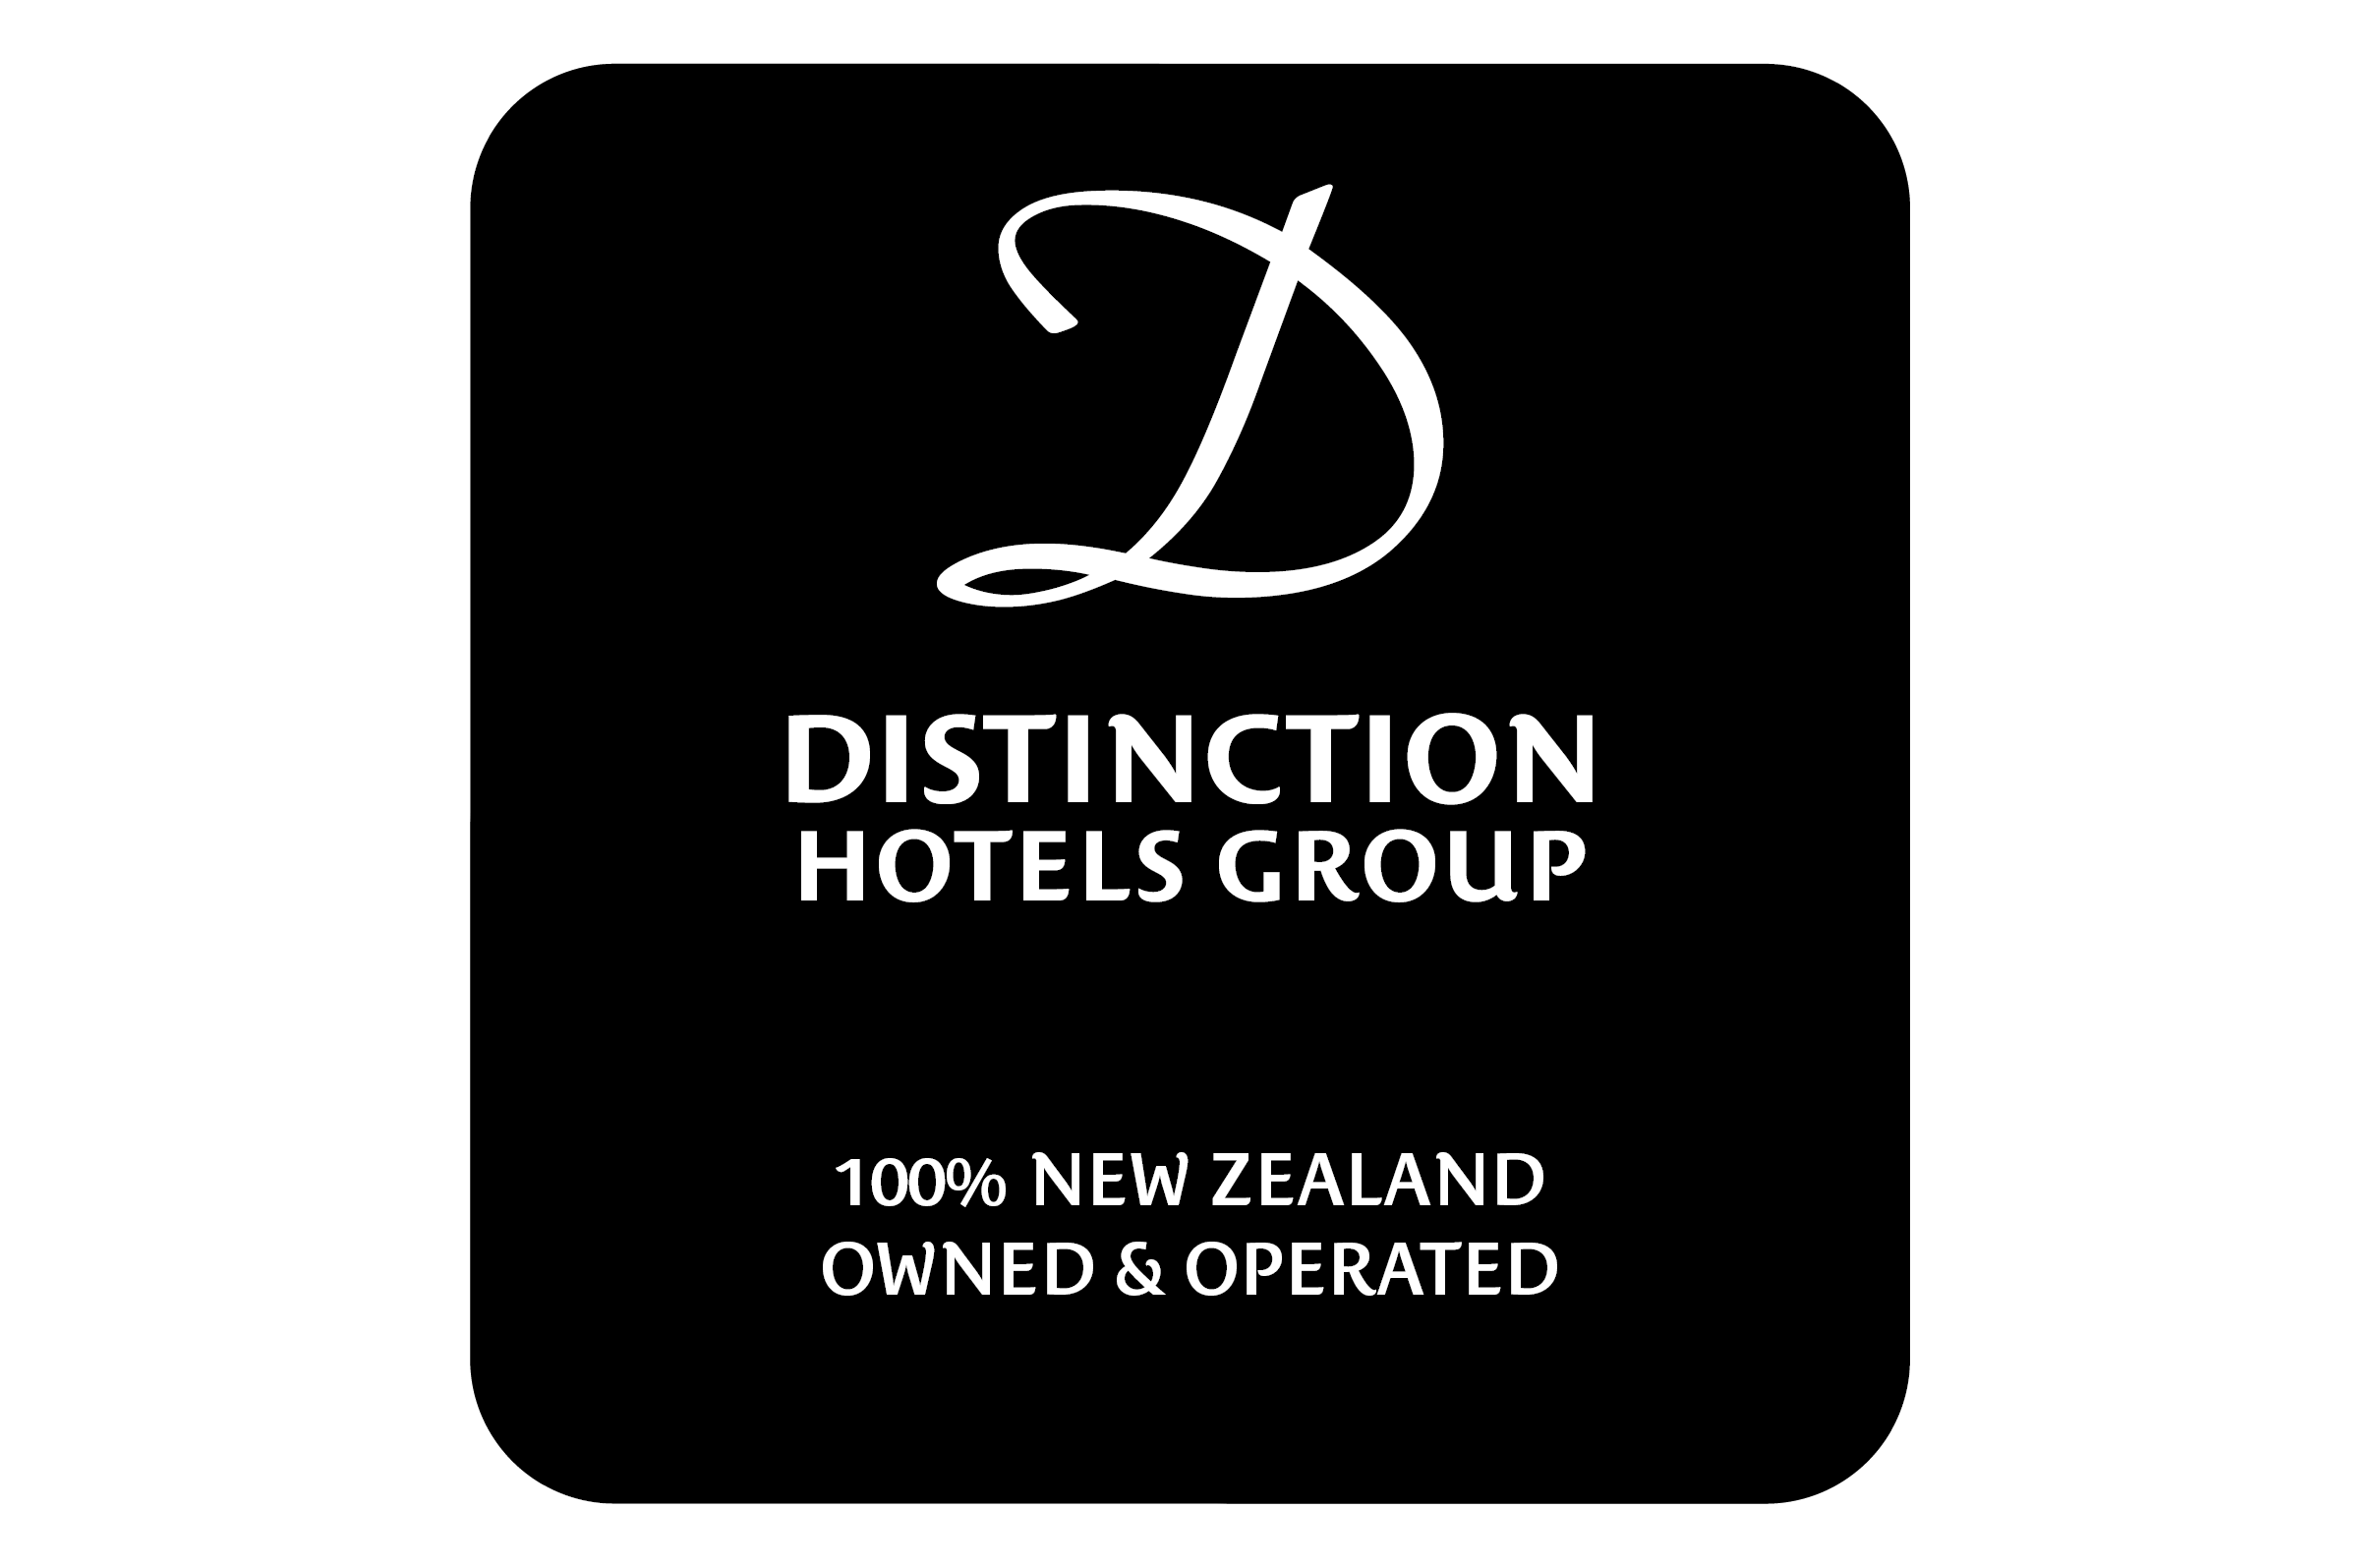 
Distinction Hotels New Zealand